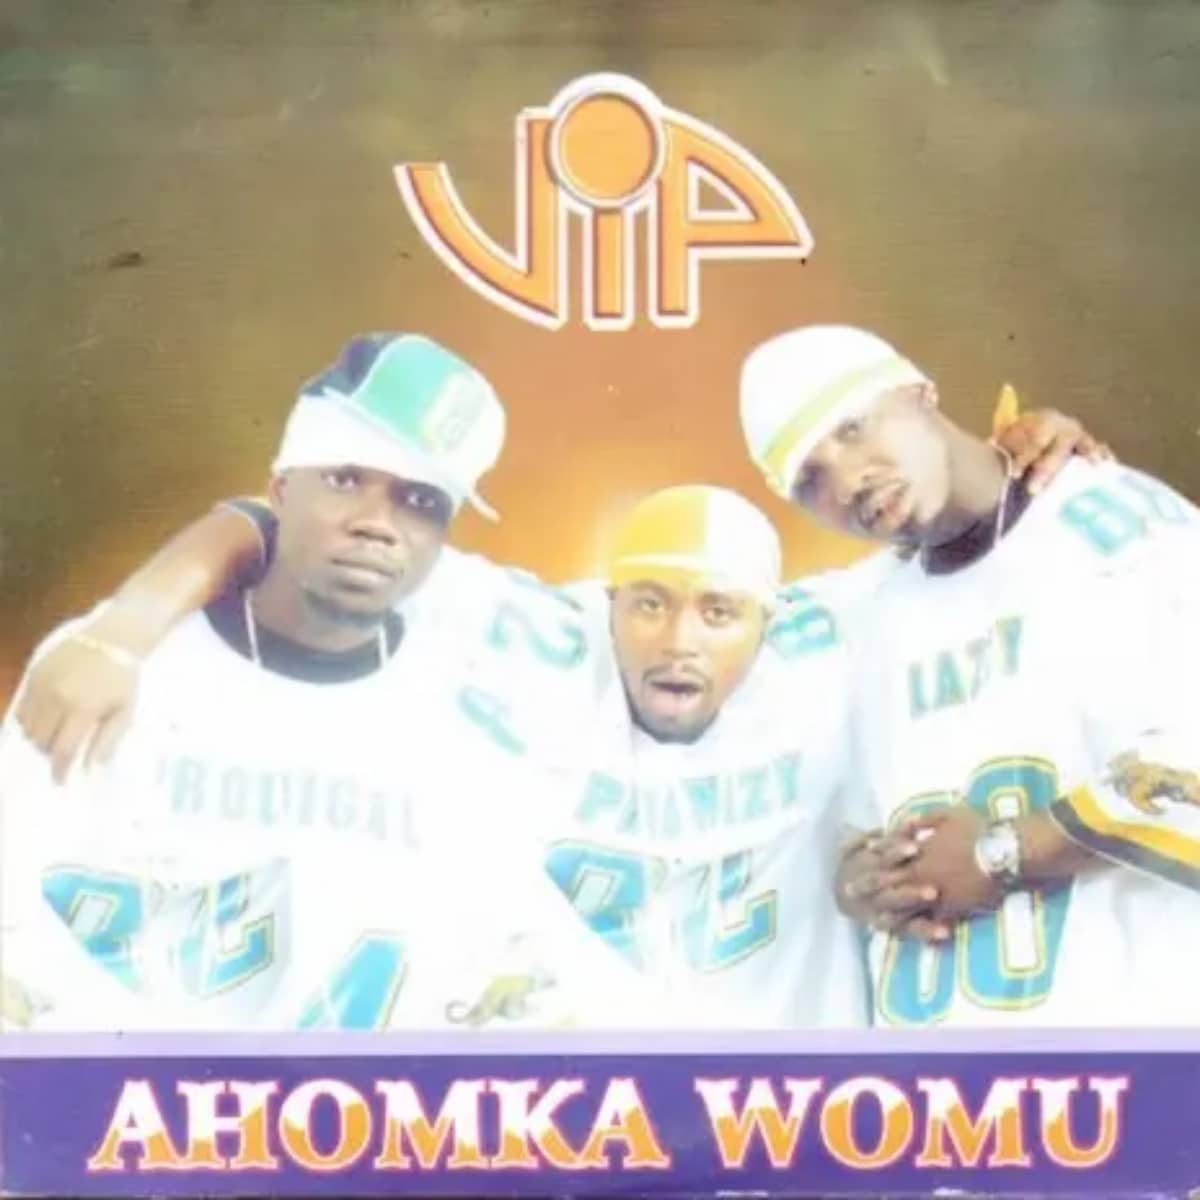 DOWNLOAD: VIP – “Ahomka Womu” Mp3